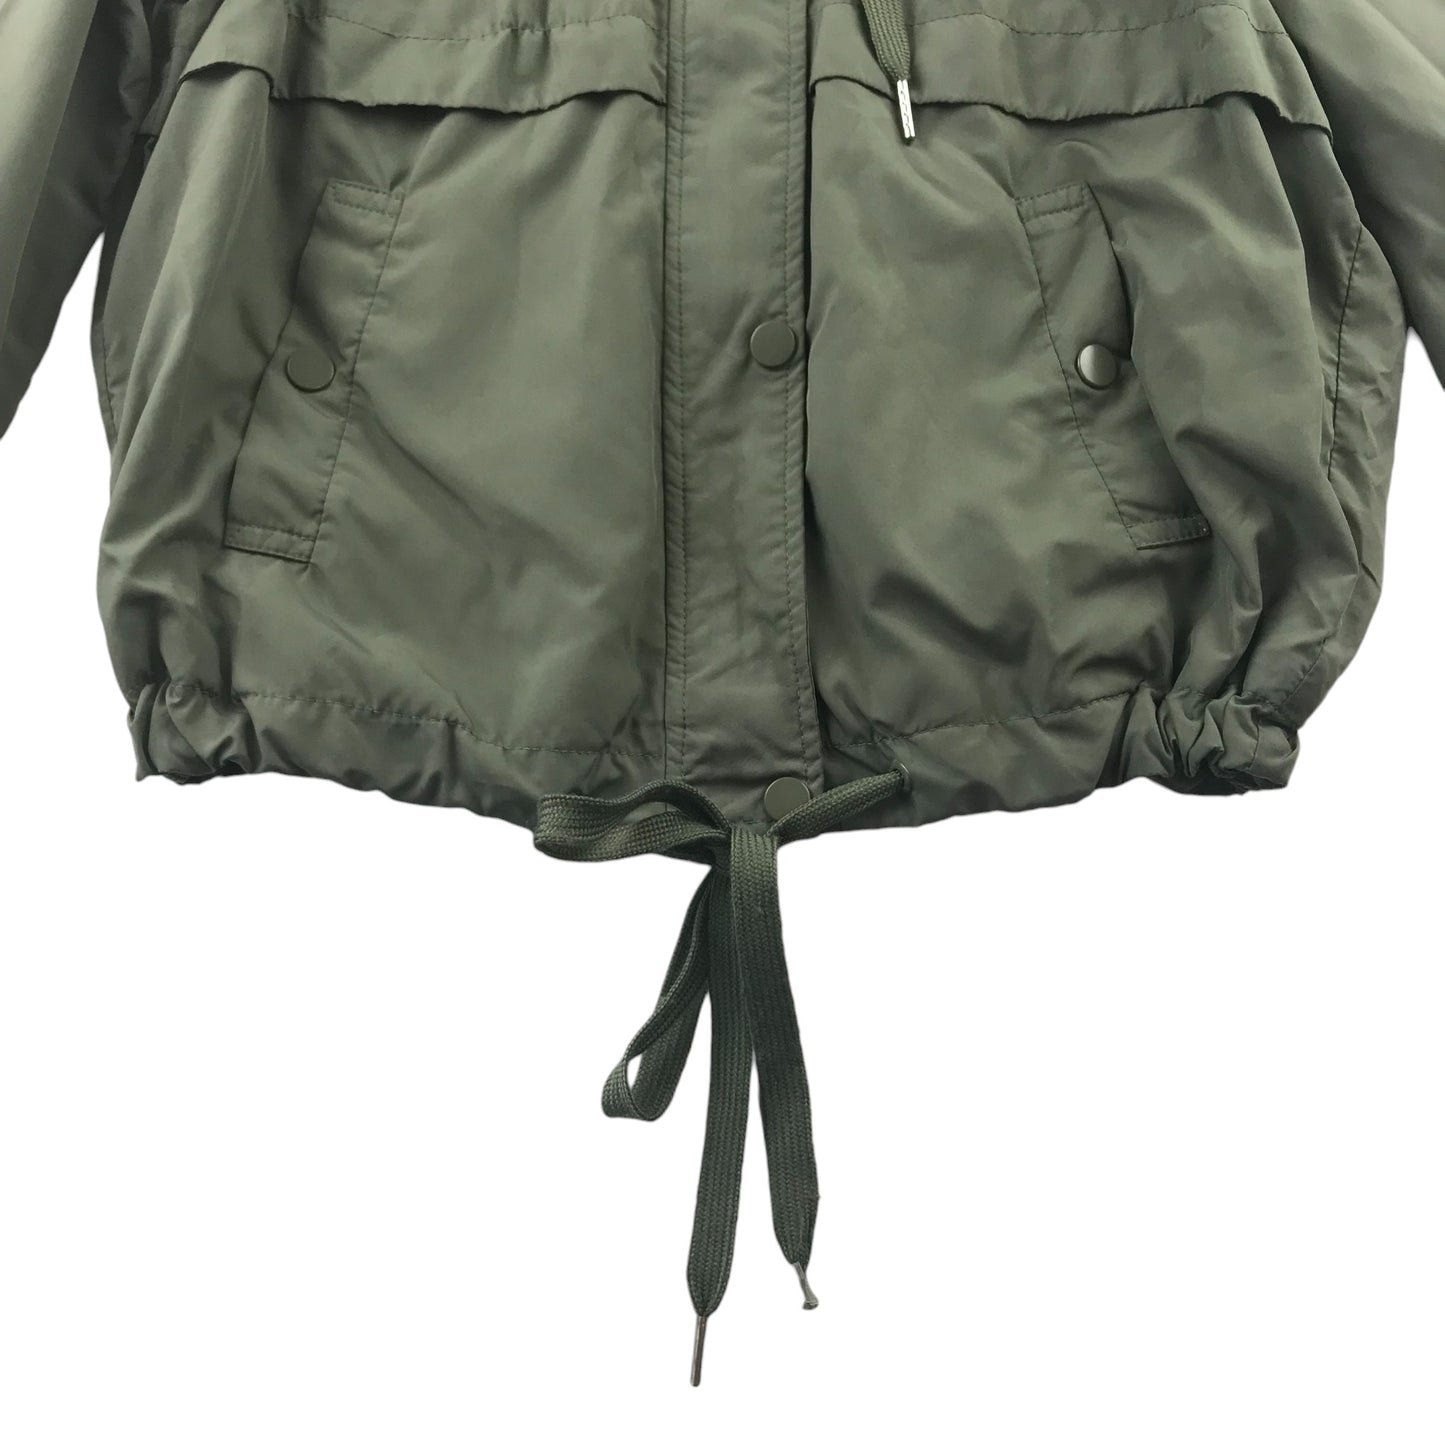 H&M light jacket women's size EUR 32 khaki green cropped over sized